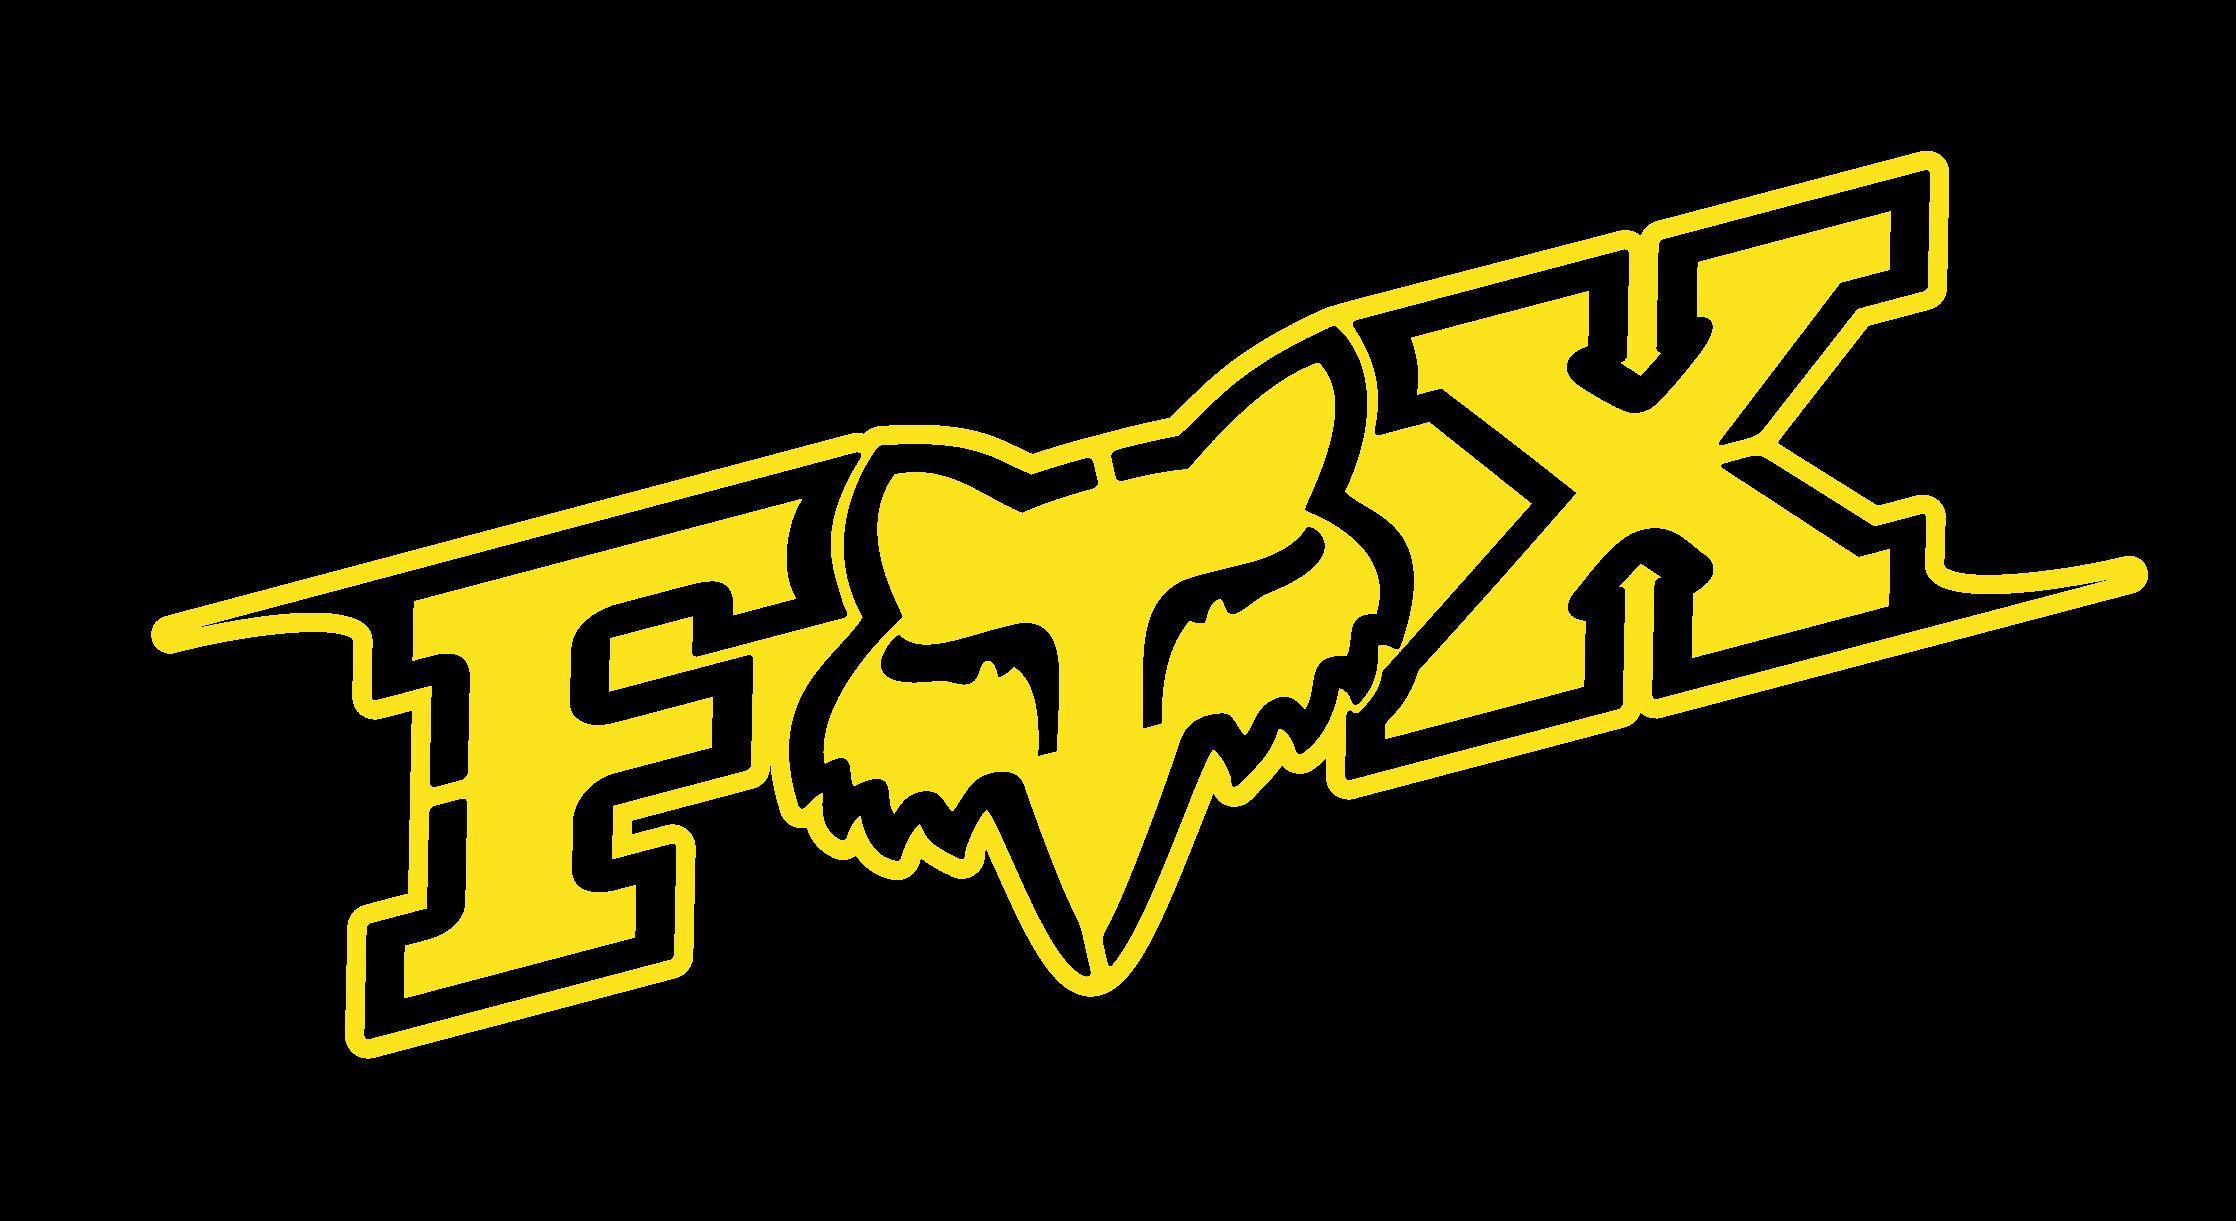 Yellow Fox Racing Wallpaper. Paravu.com